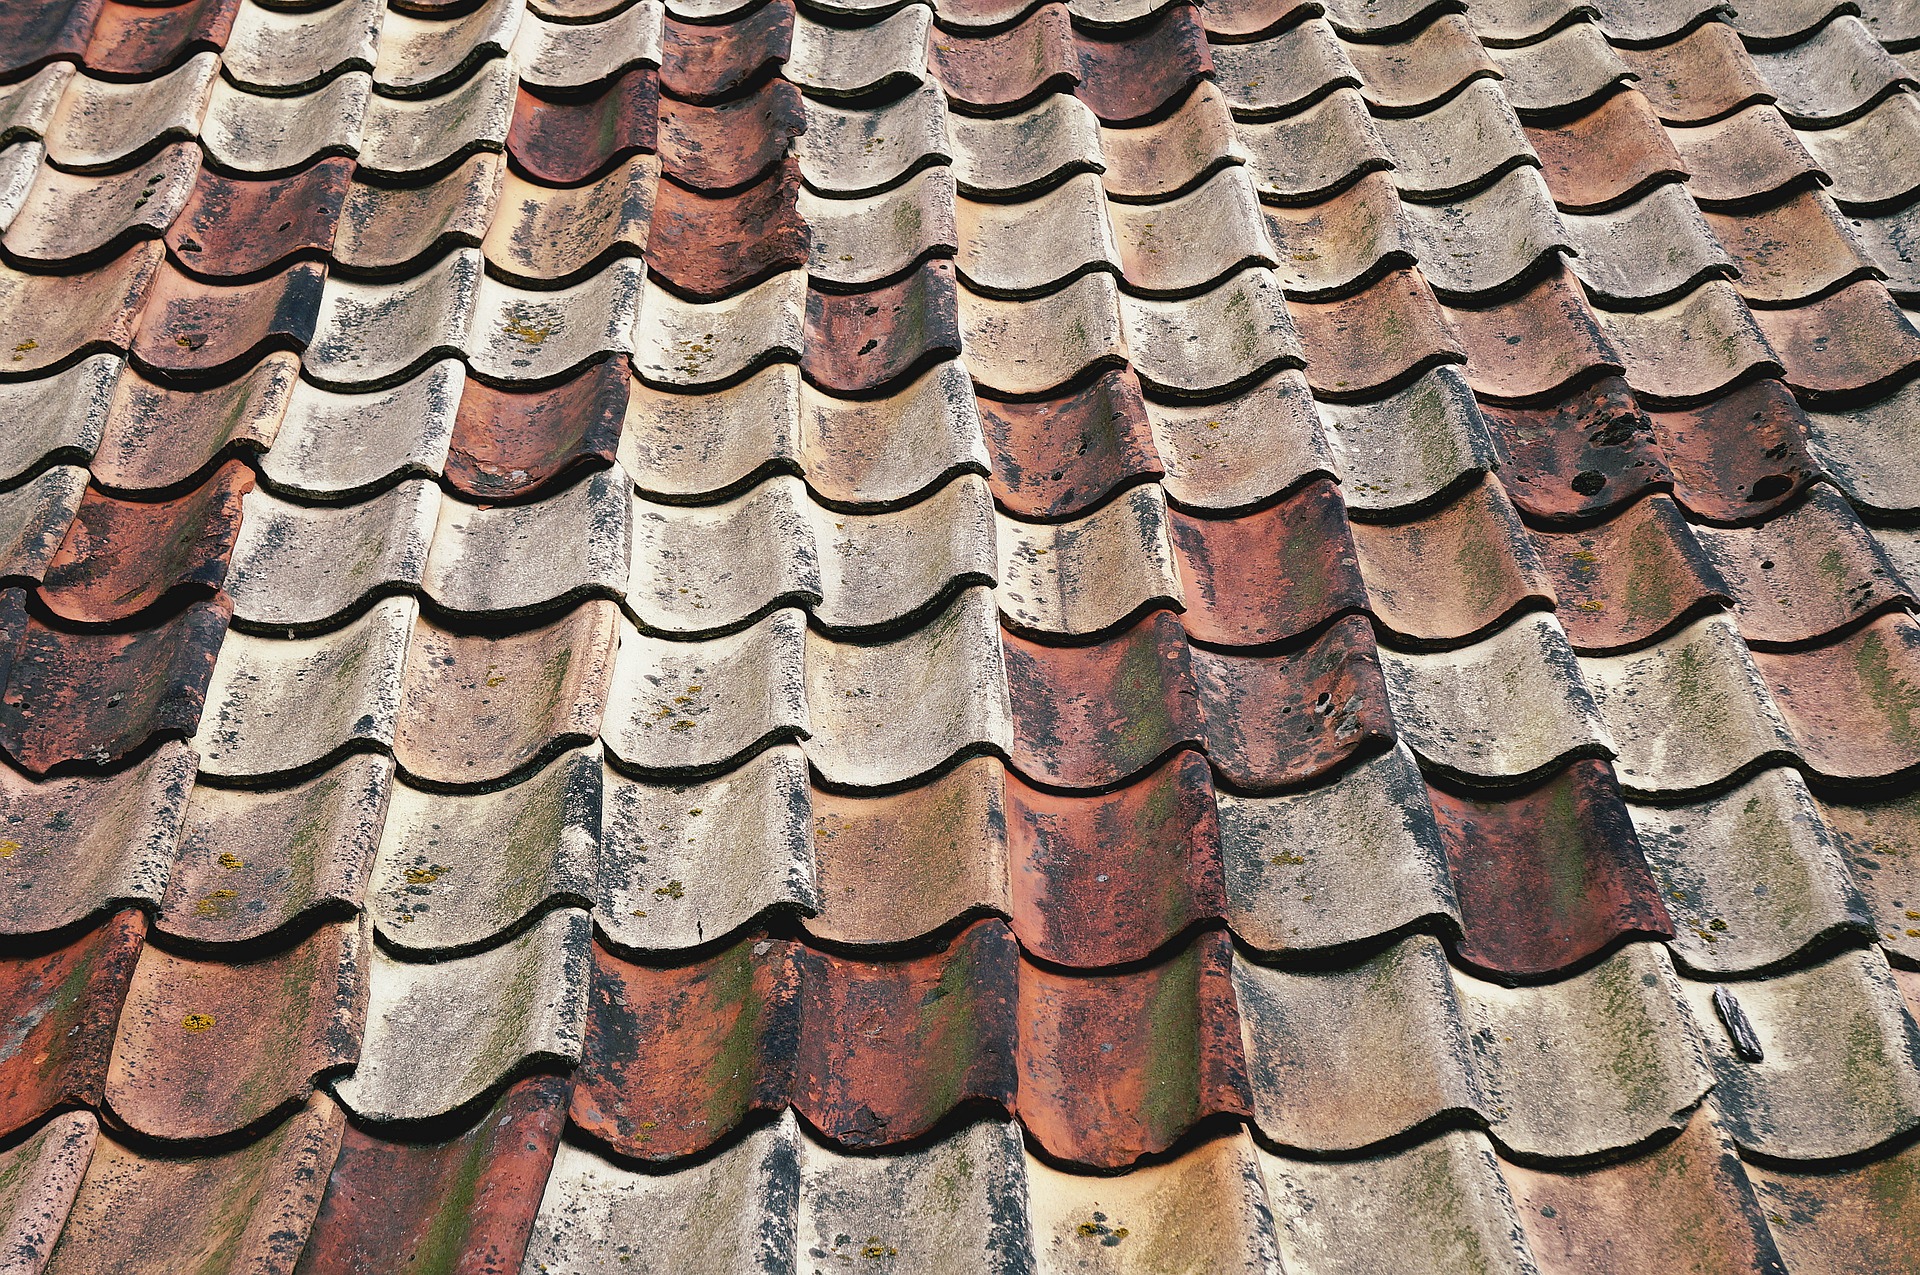 roof maintenance 